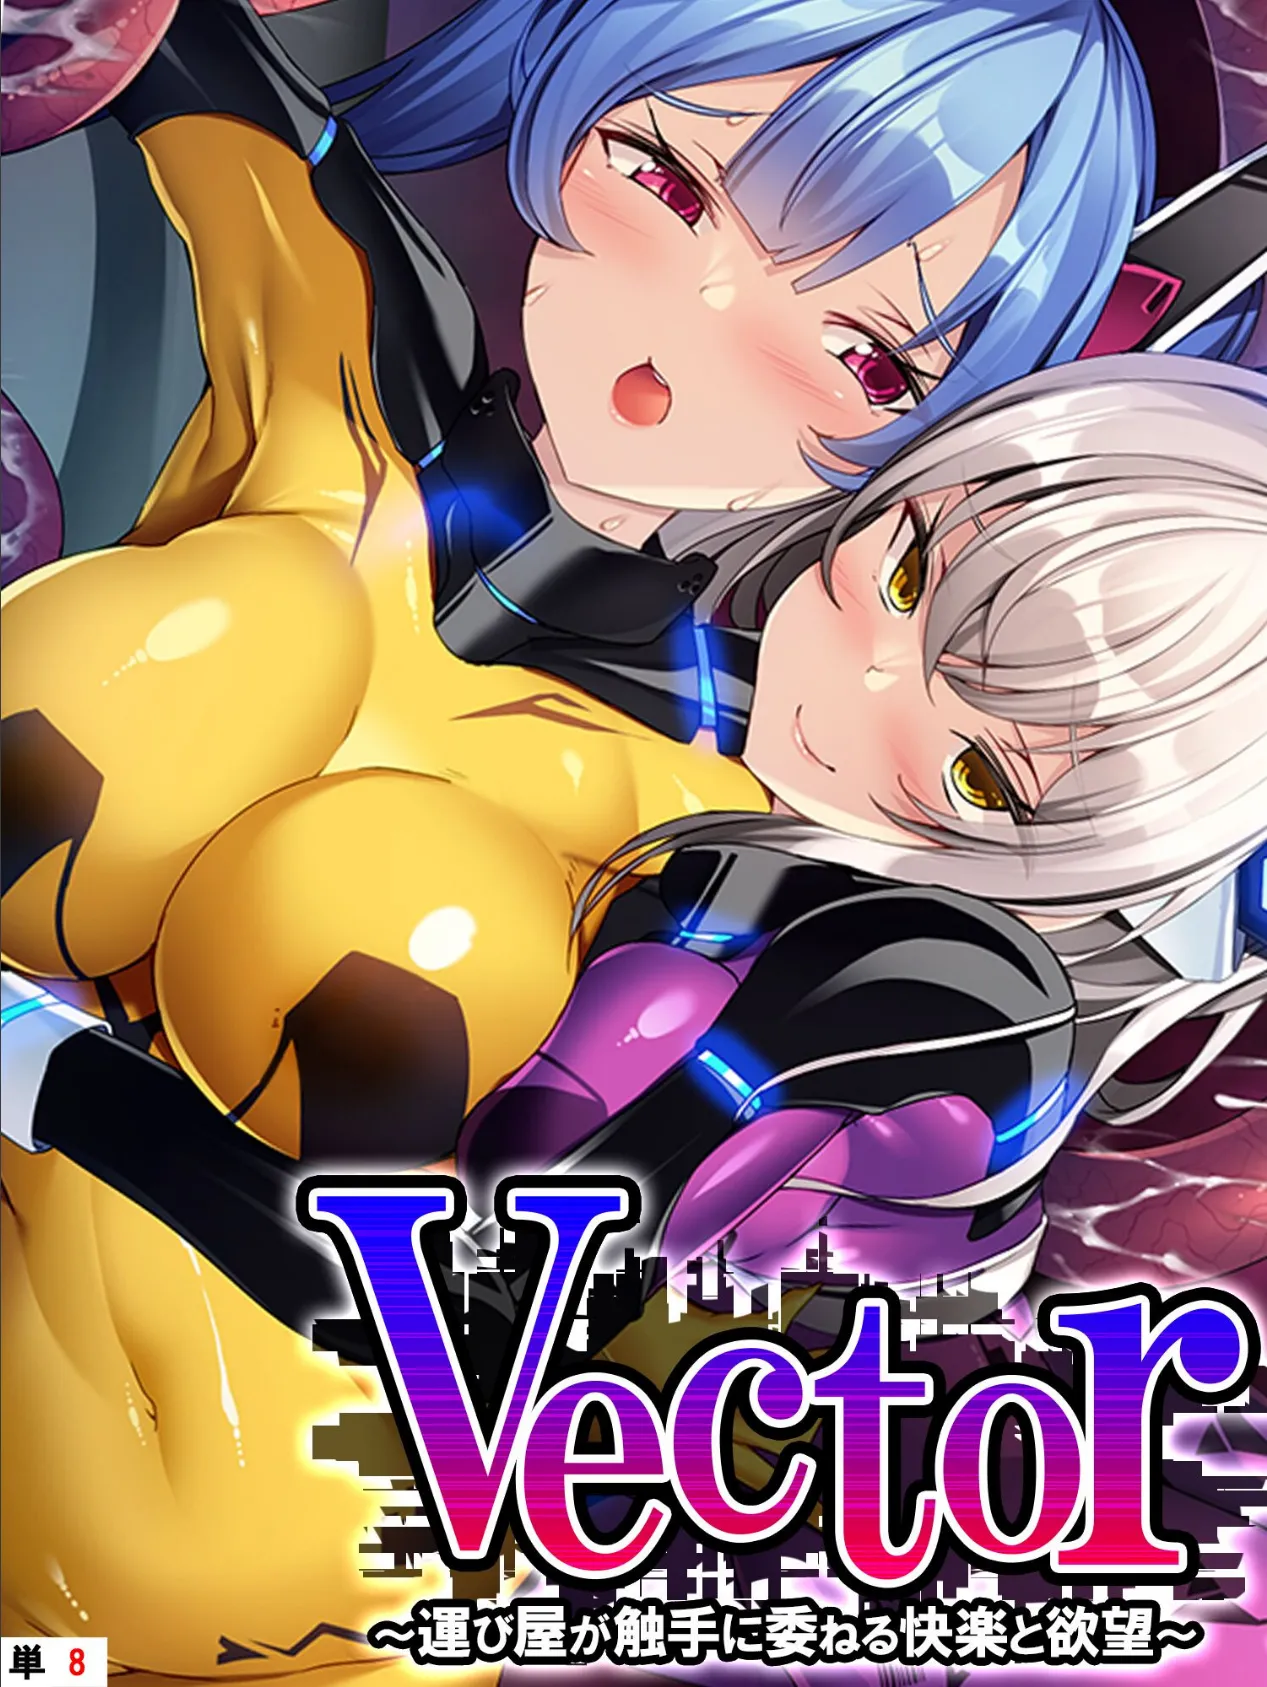 Vector 〜運び屋が触手に委ねる快楽と欲望〜 【単話】 第8話